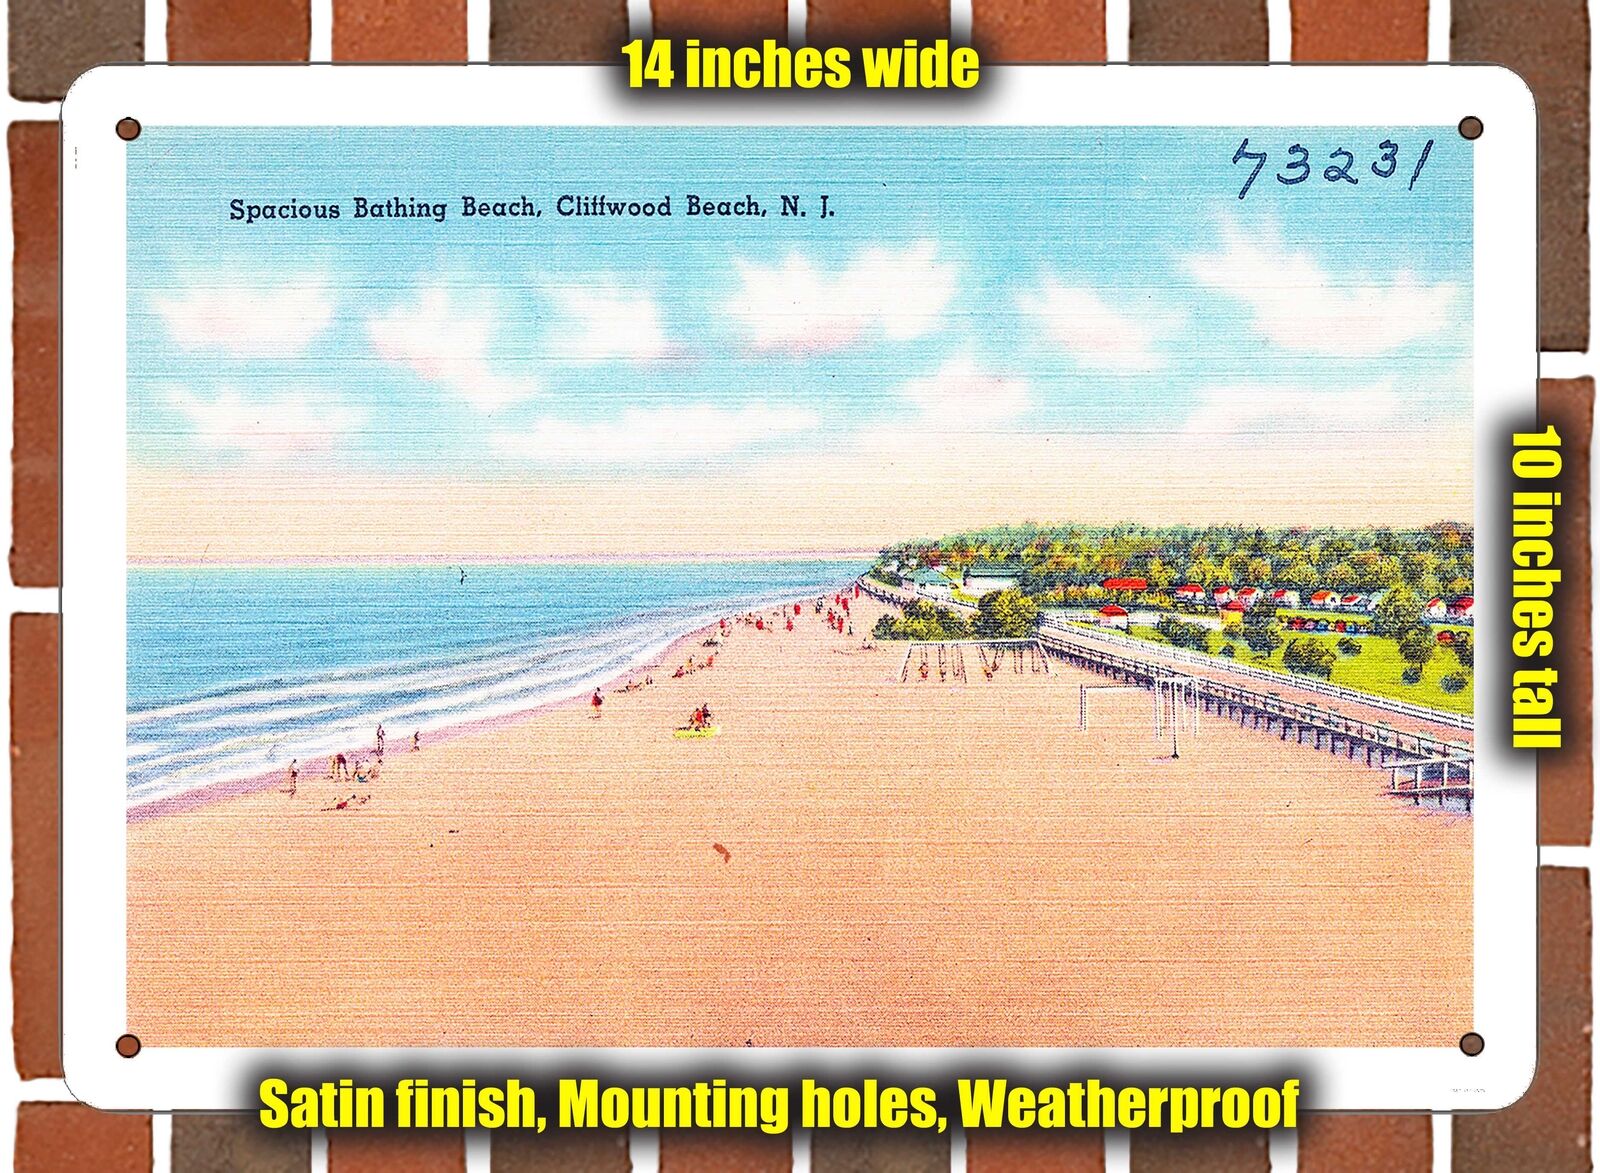 METAL SIGN - New Jersey Postcard - Spacious Bathing Beach, Cliffwood Beach, N.J